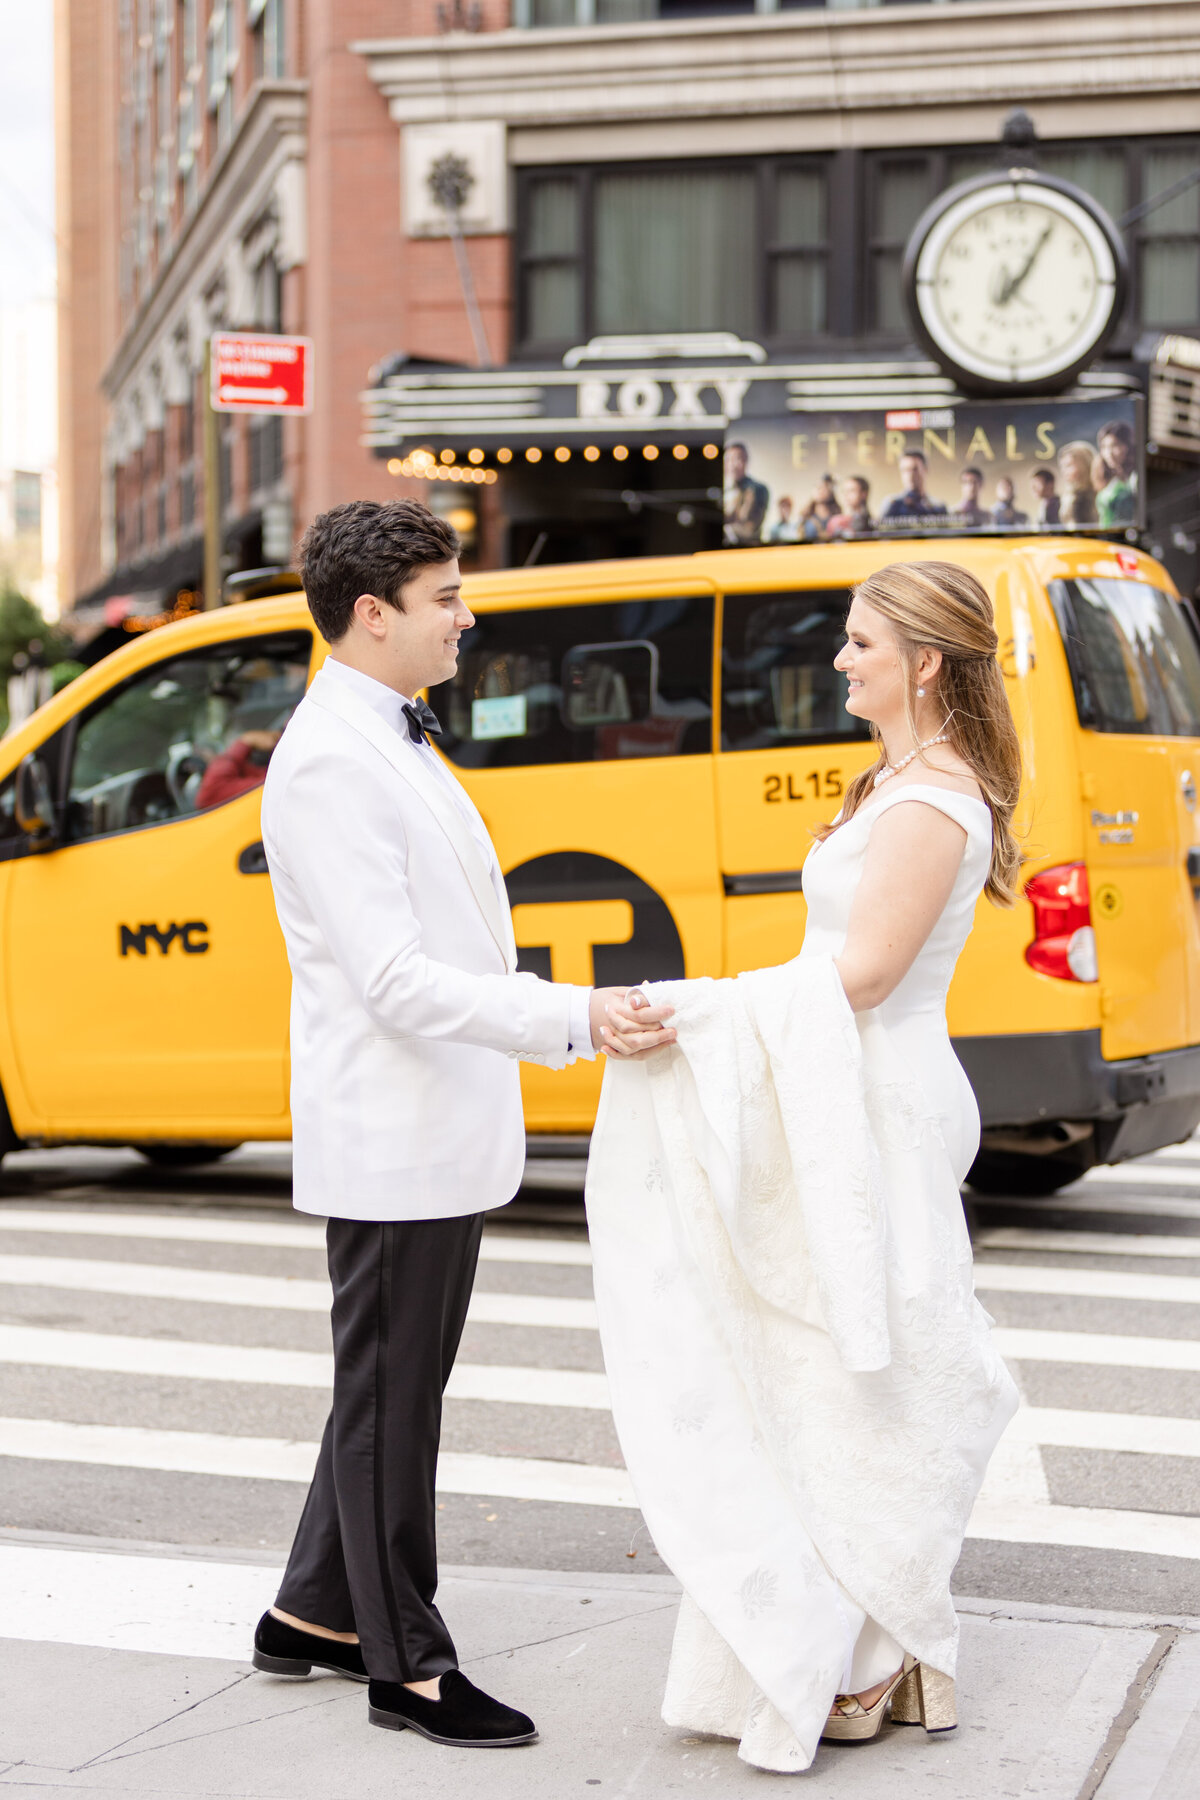 NYC Wedding Street Portraits with Bride and Groom